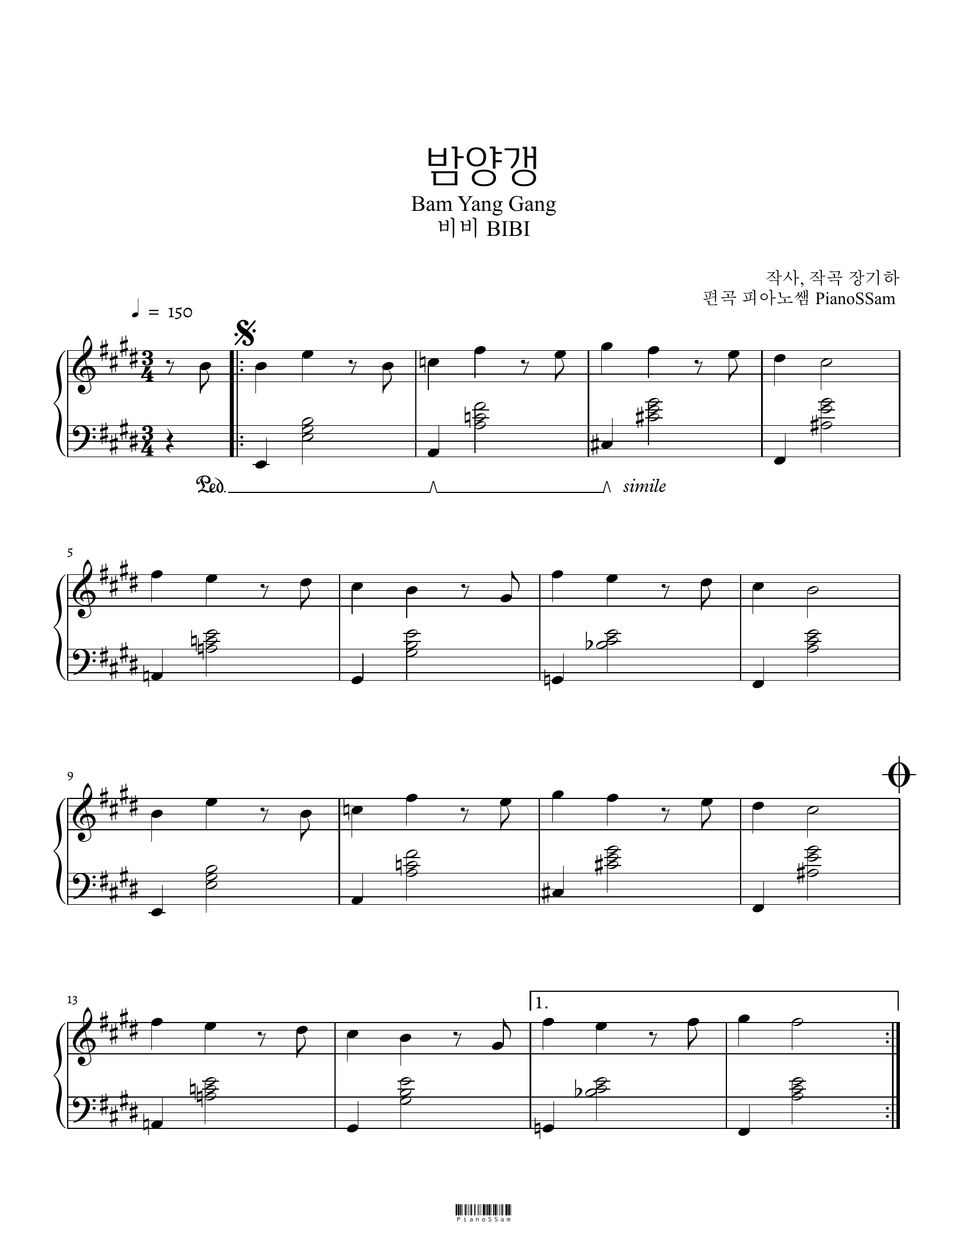 BIBI - Bam Yang Gang (K-pop) by PianoSSam